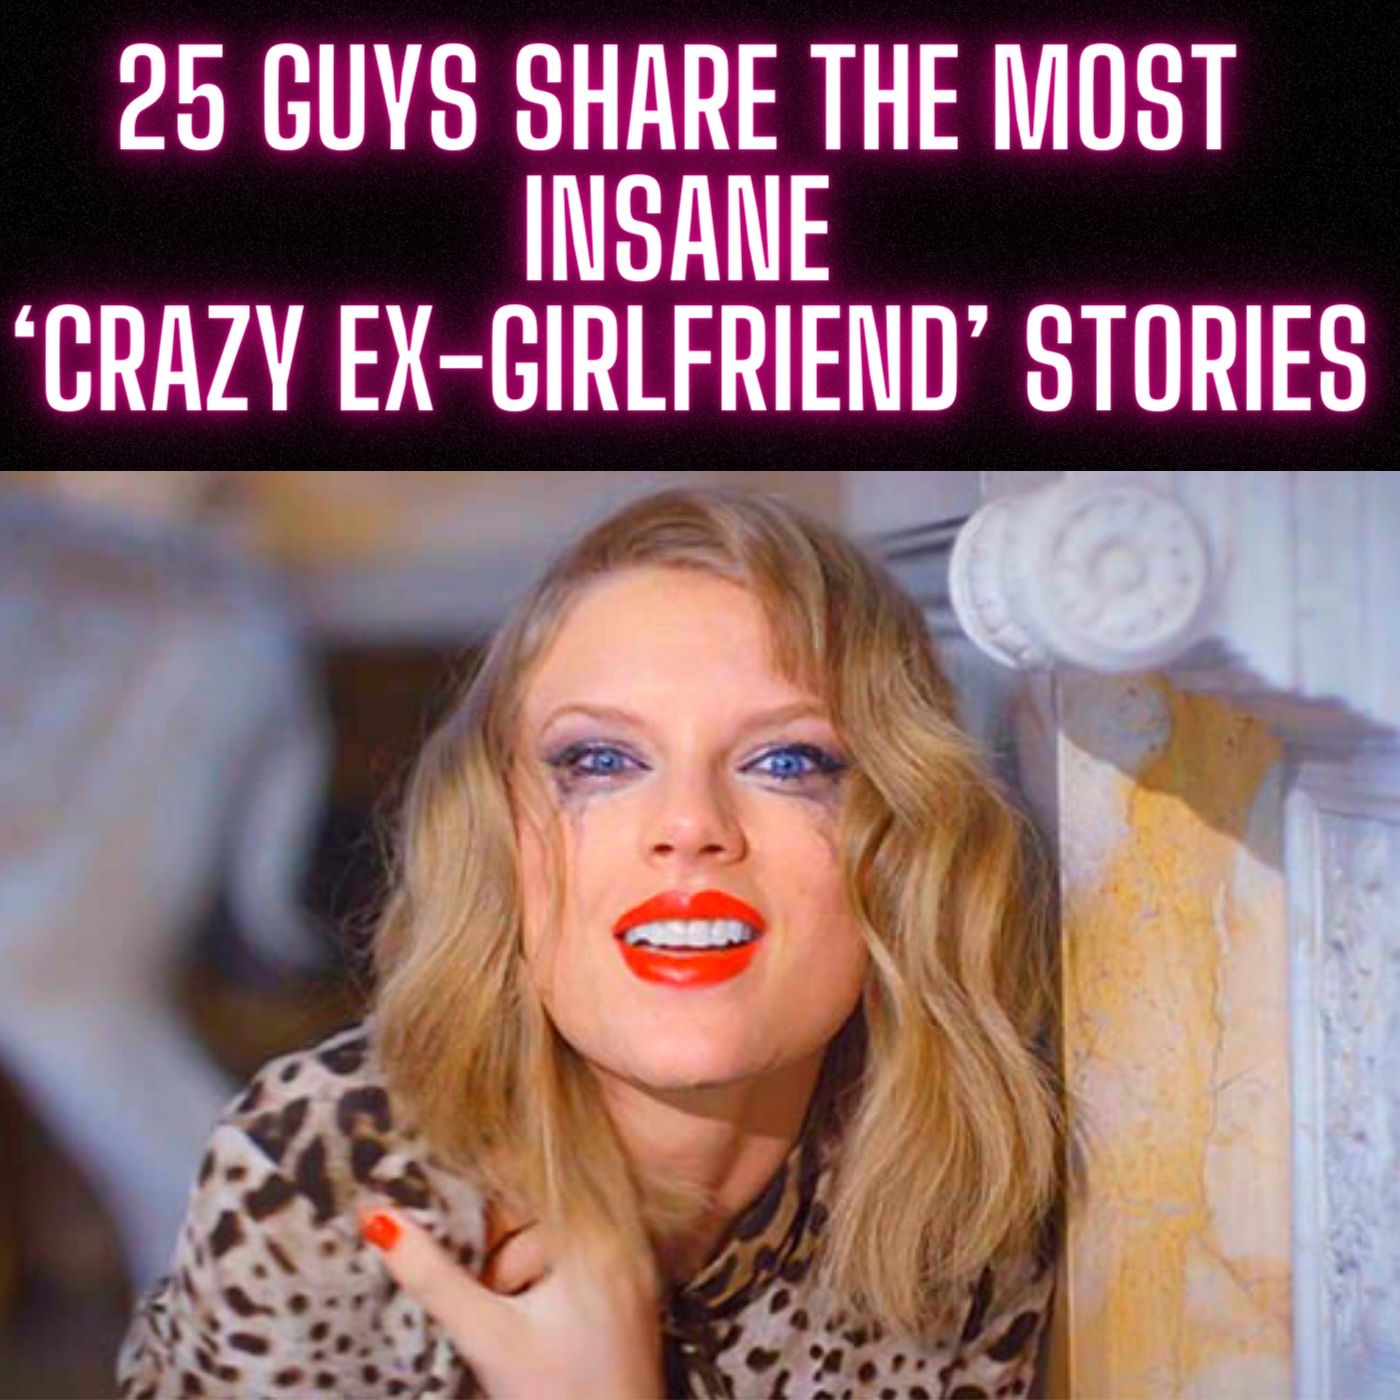 25 Guys Share The Most Insane ‘Crazy Ex-Girlfriend’ Stories! TRUE Crazy Ex Wives and Girlfriend Stories